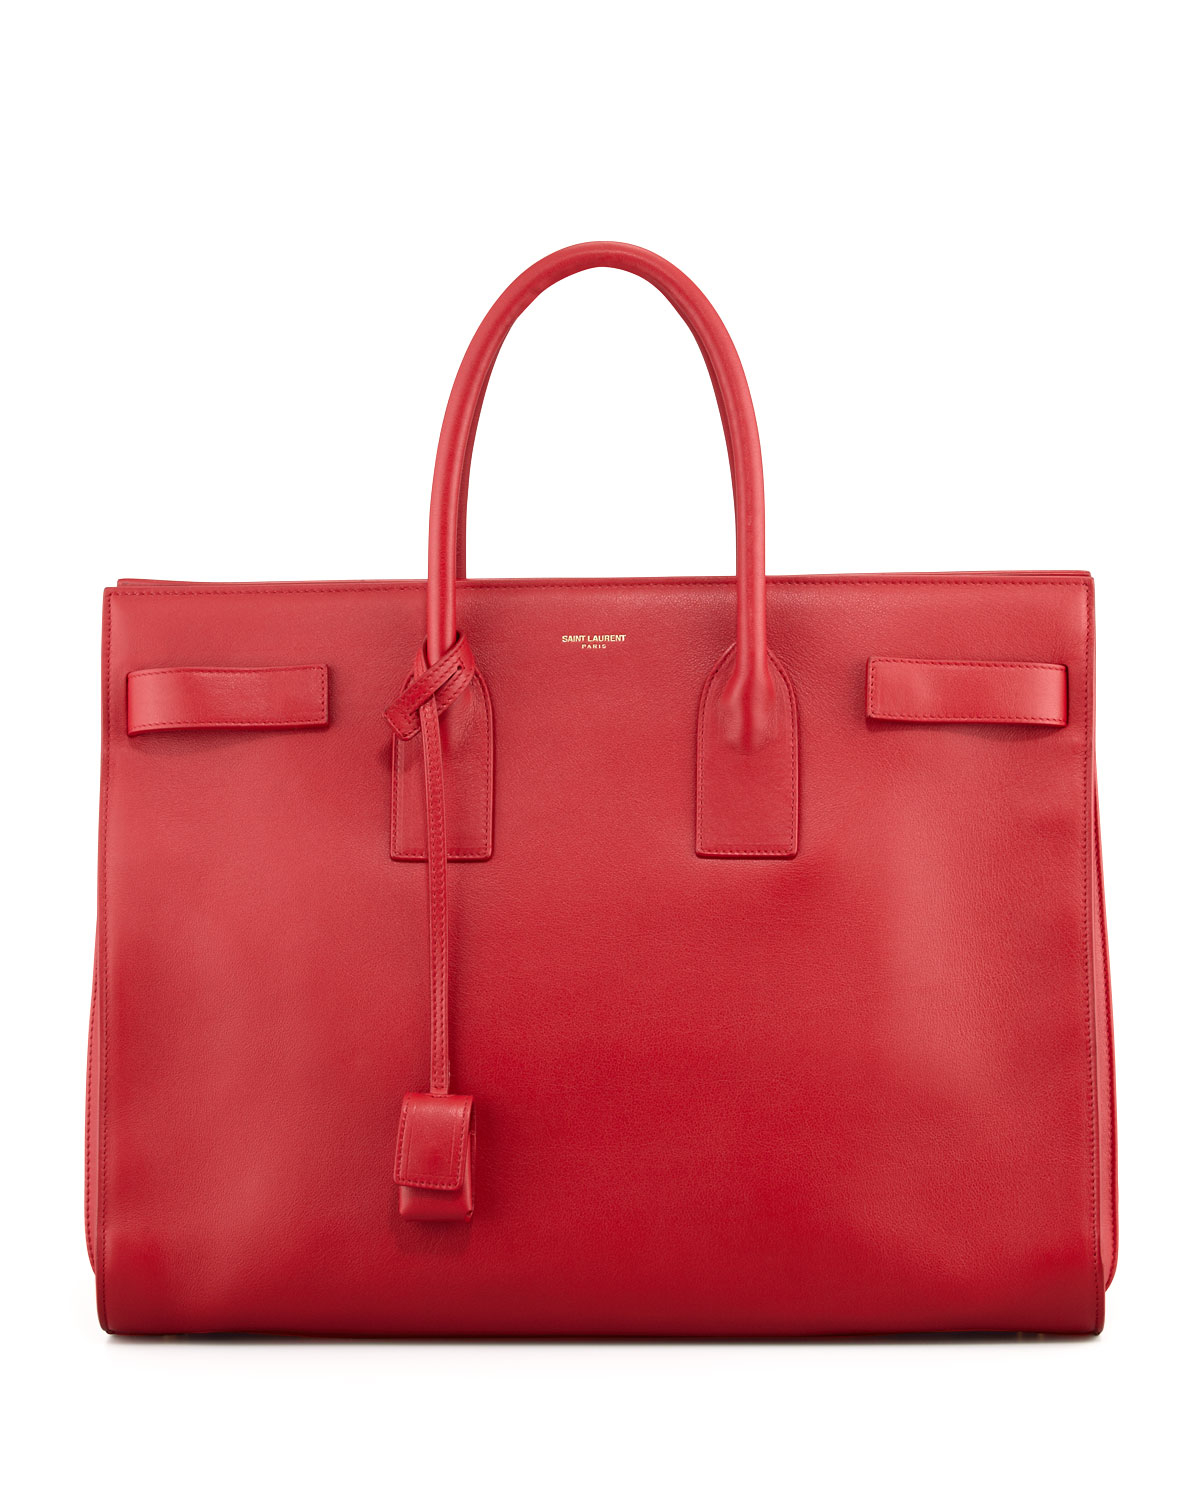 Saint laurent Classic Sac De Jour Leather Tote Bag in Red | Lyst